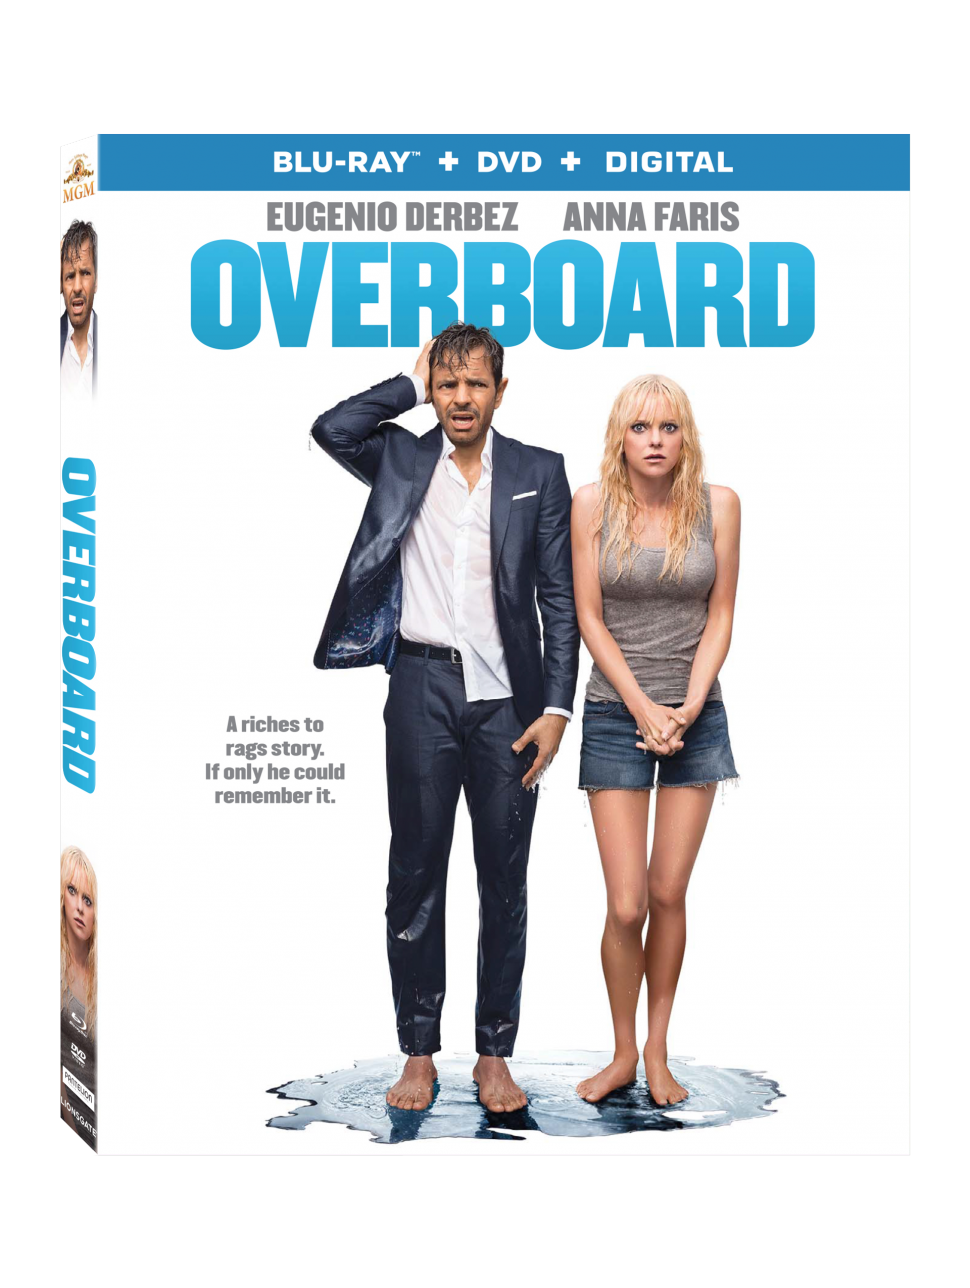 Overboard Blu-ray Artwork